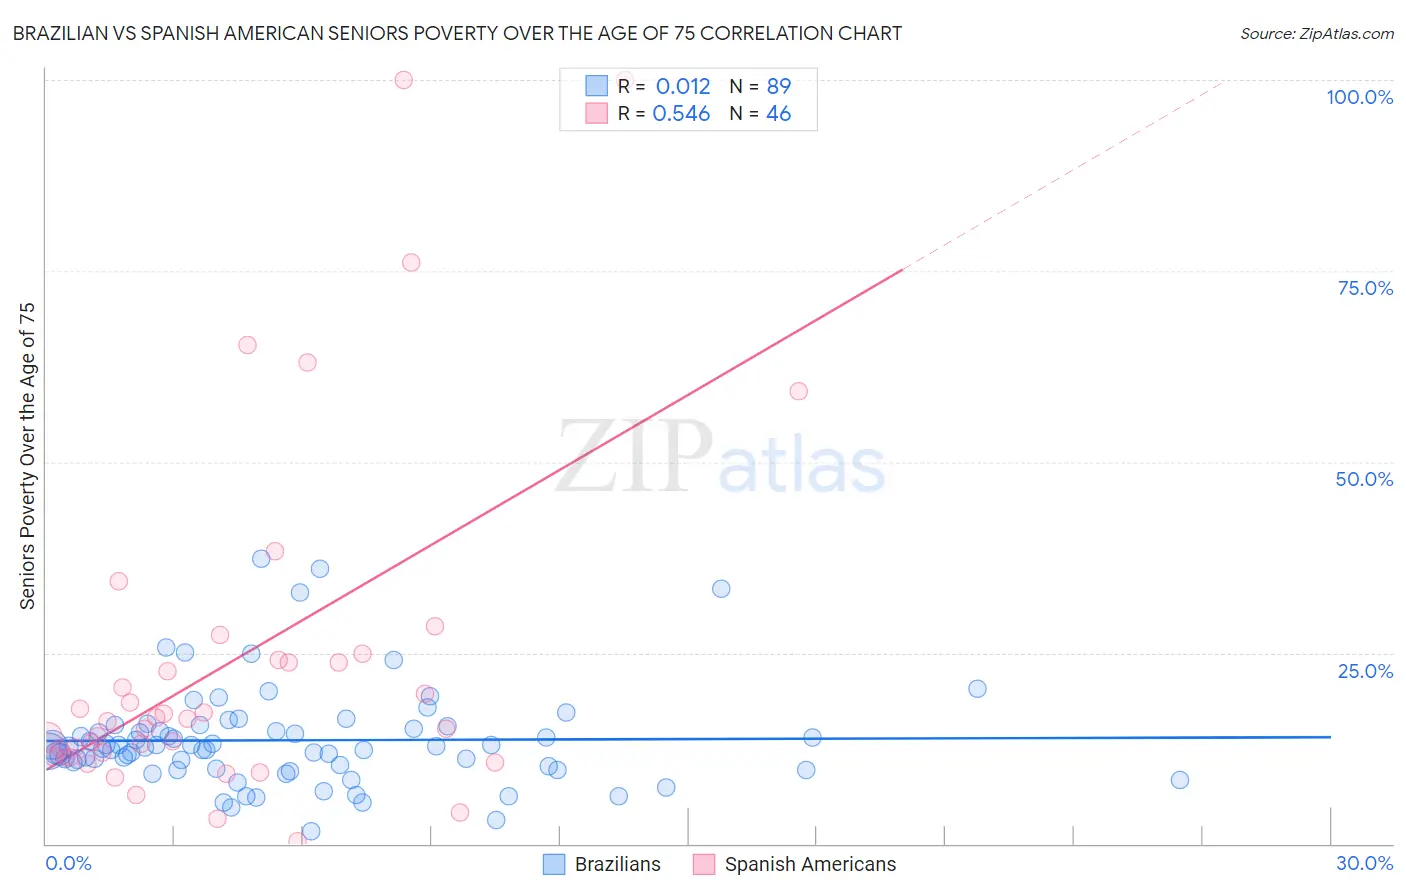 Brazilian vs Spanish American Seniors Poverty Over the Age of 75